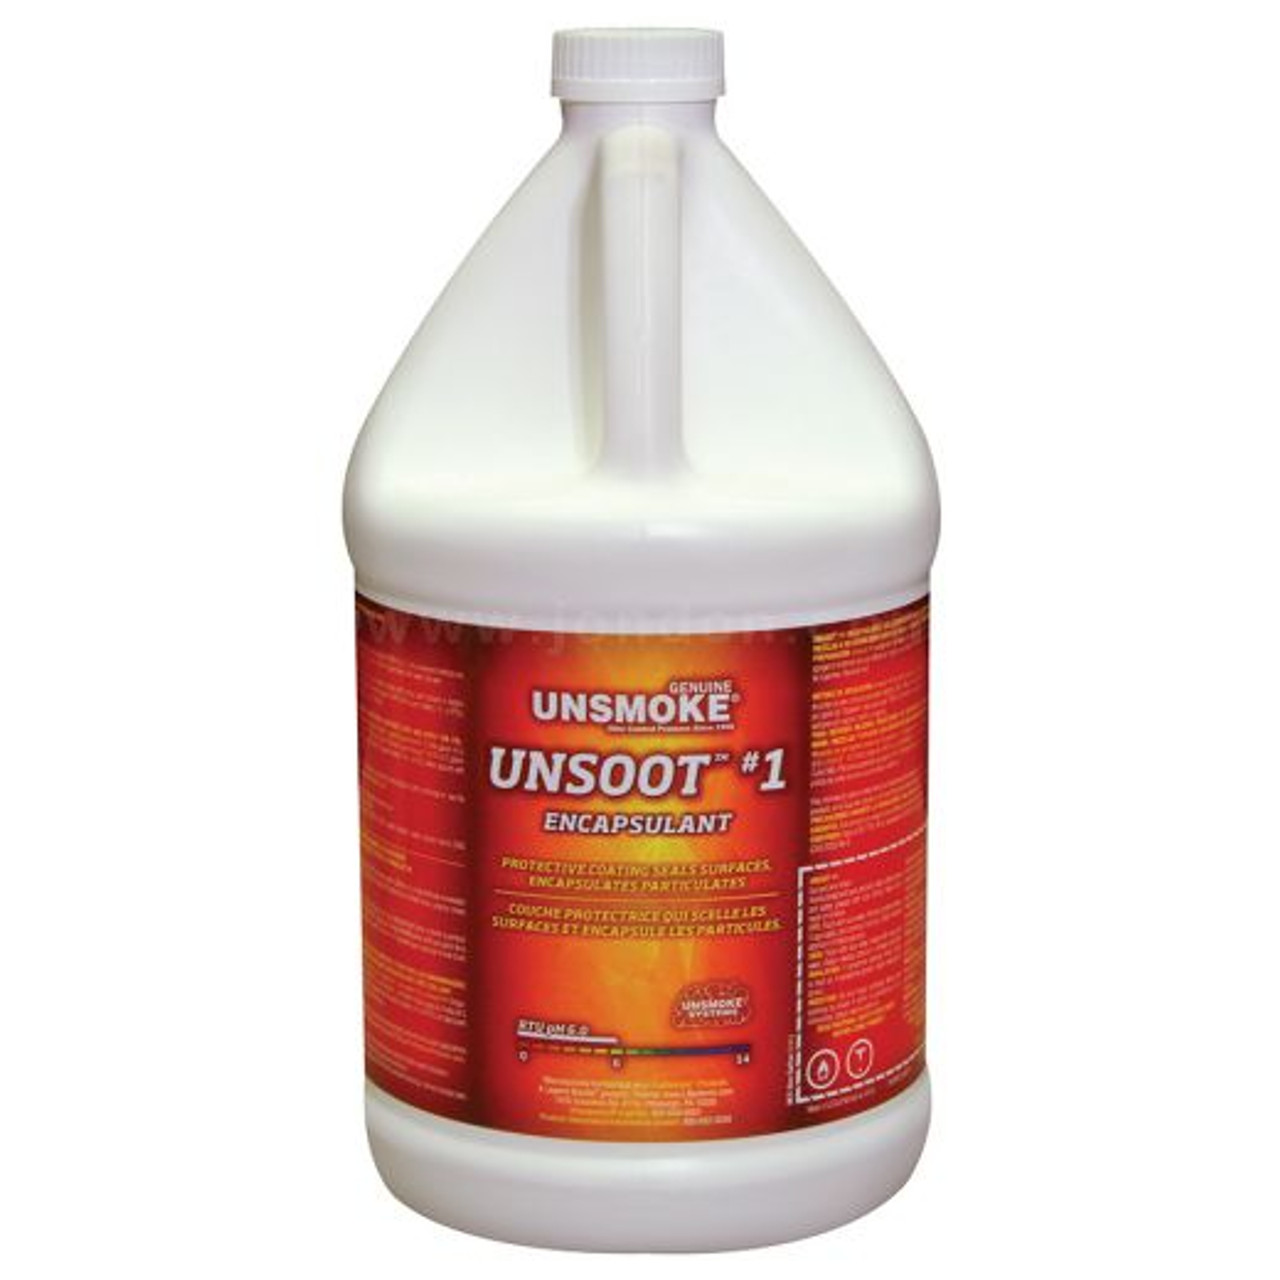 Unsmoke Unsoot #1 Encapsulant - 1gal - CASE of 4ea